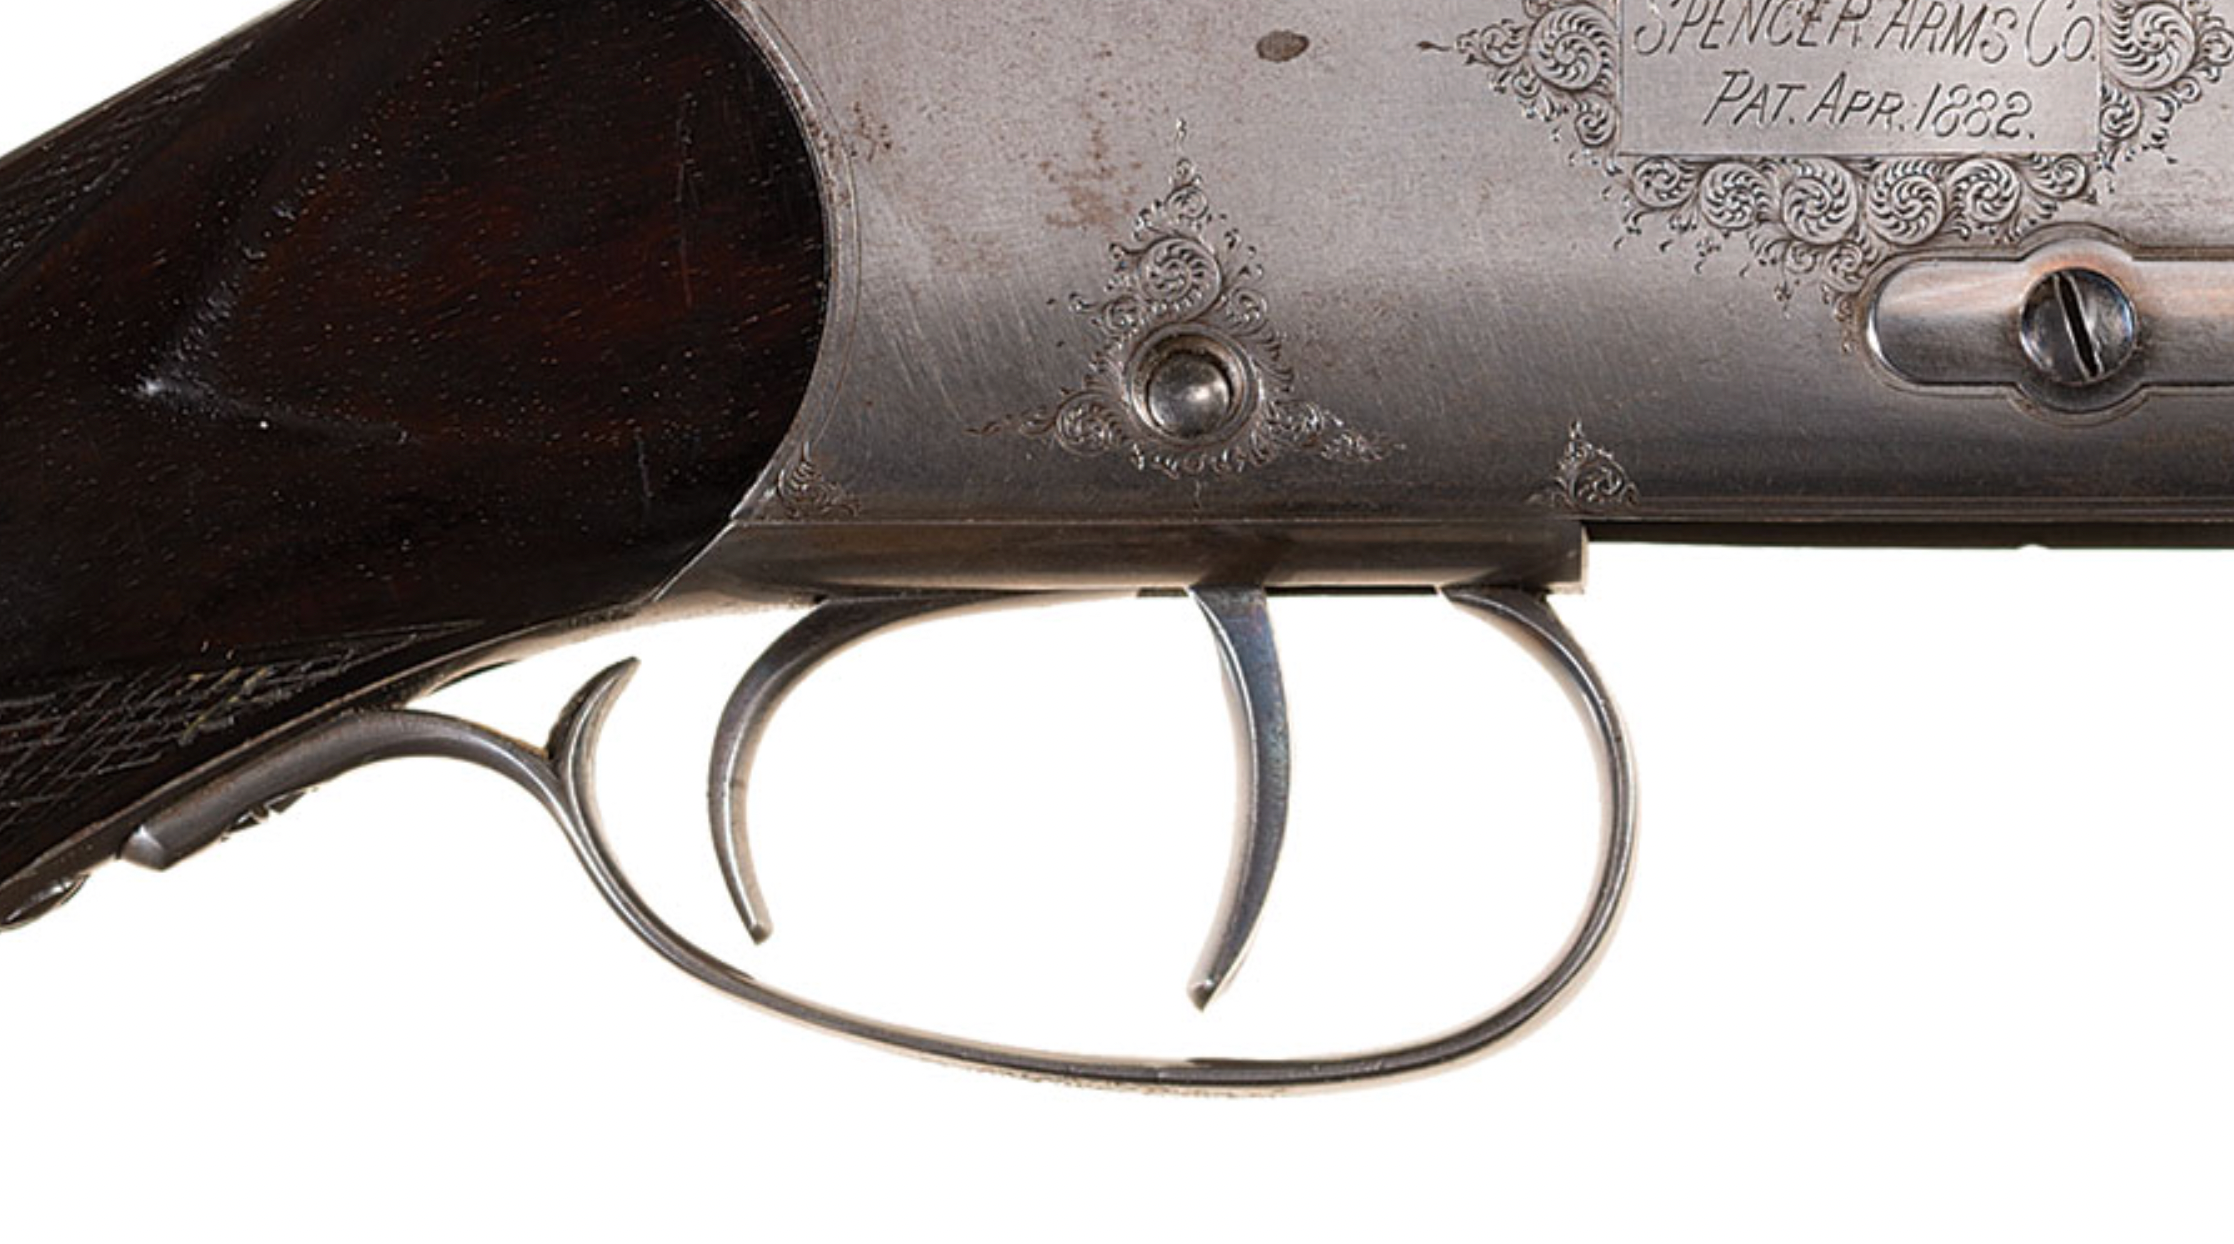 The two triggers on a spencer roper slide action shotgun.